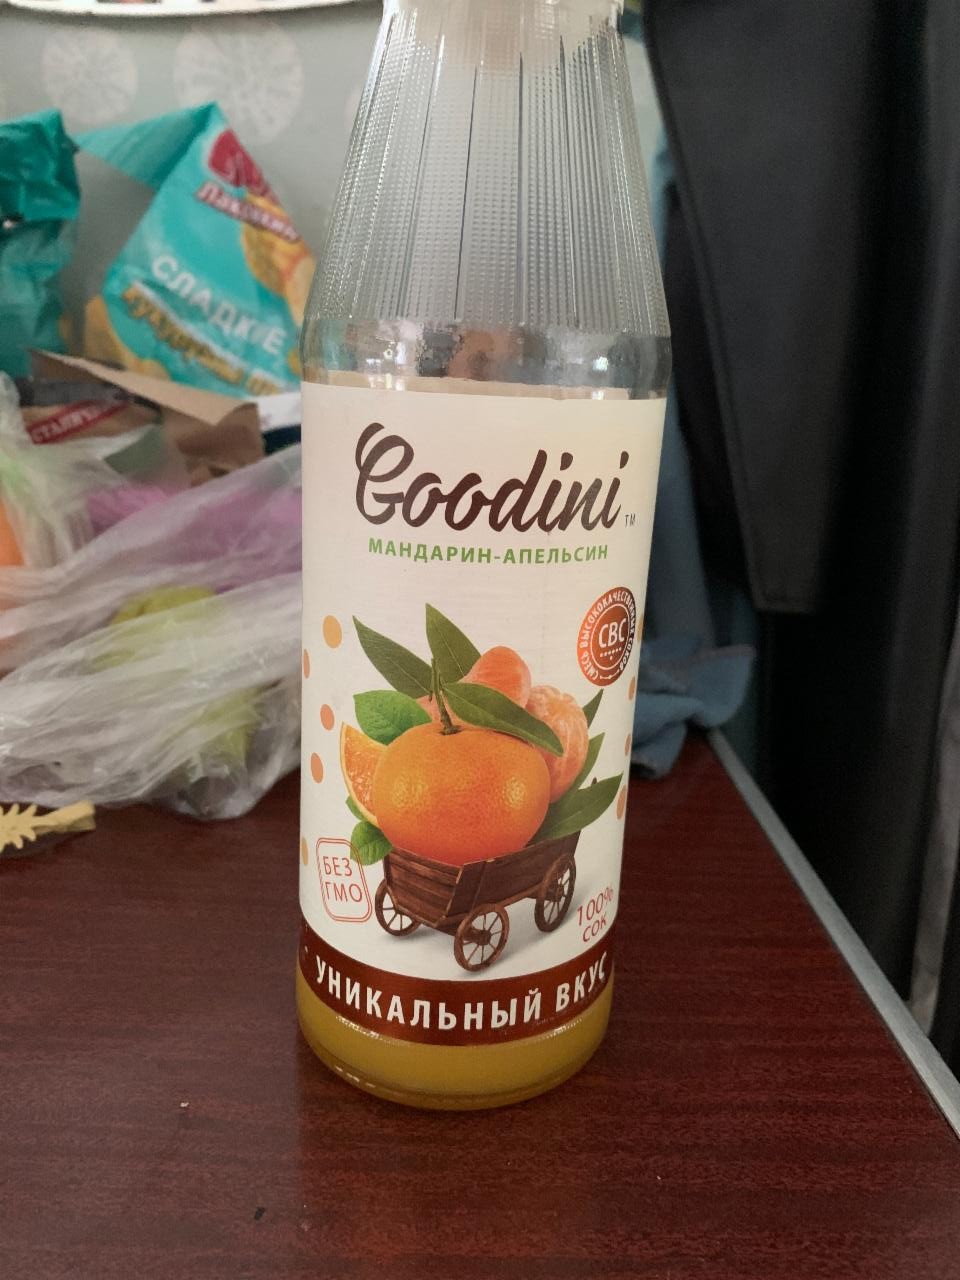 Фото - сок мандарин-апельсин Goodini